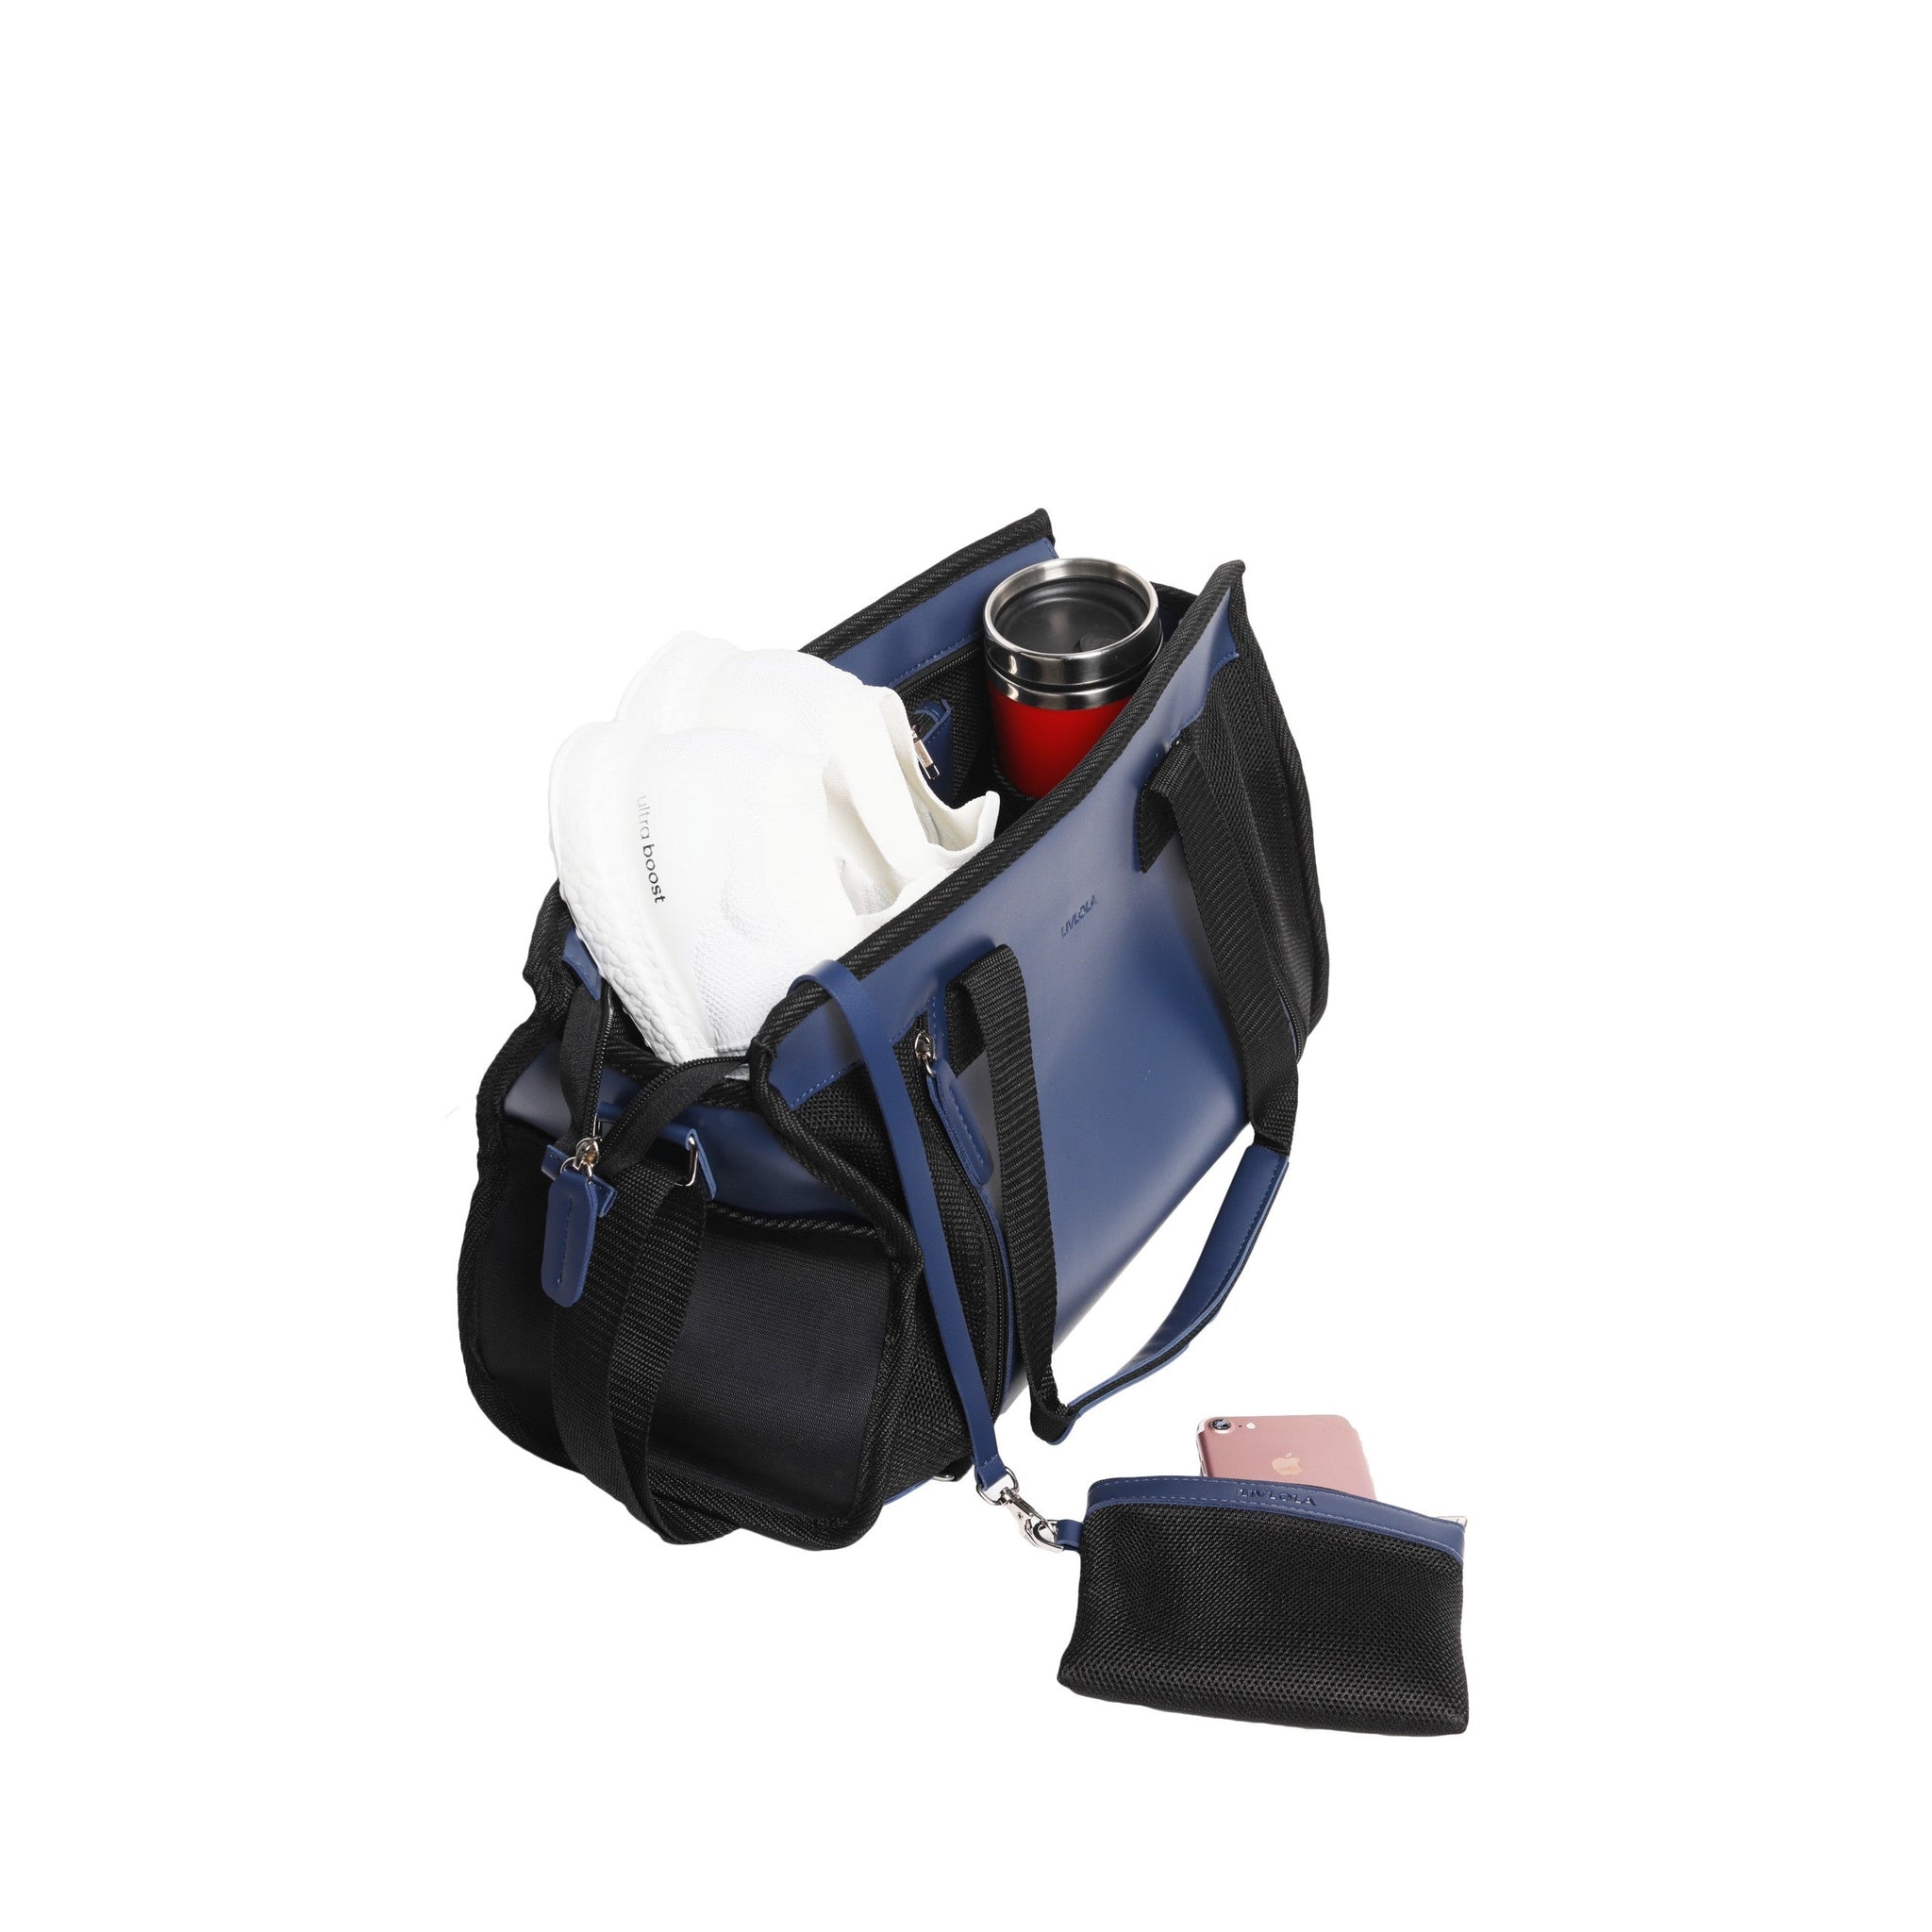 Lakota Mini Duffel Bag in navy blue & black